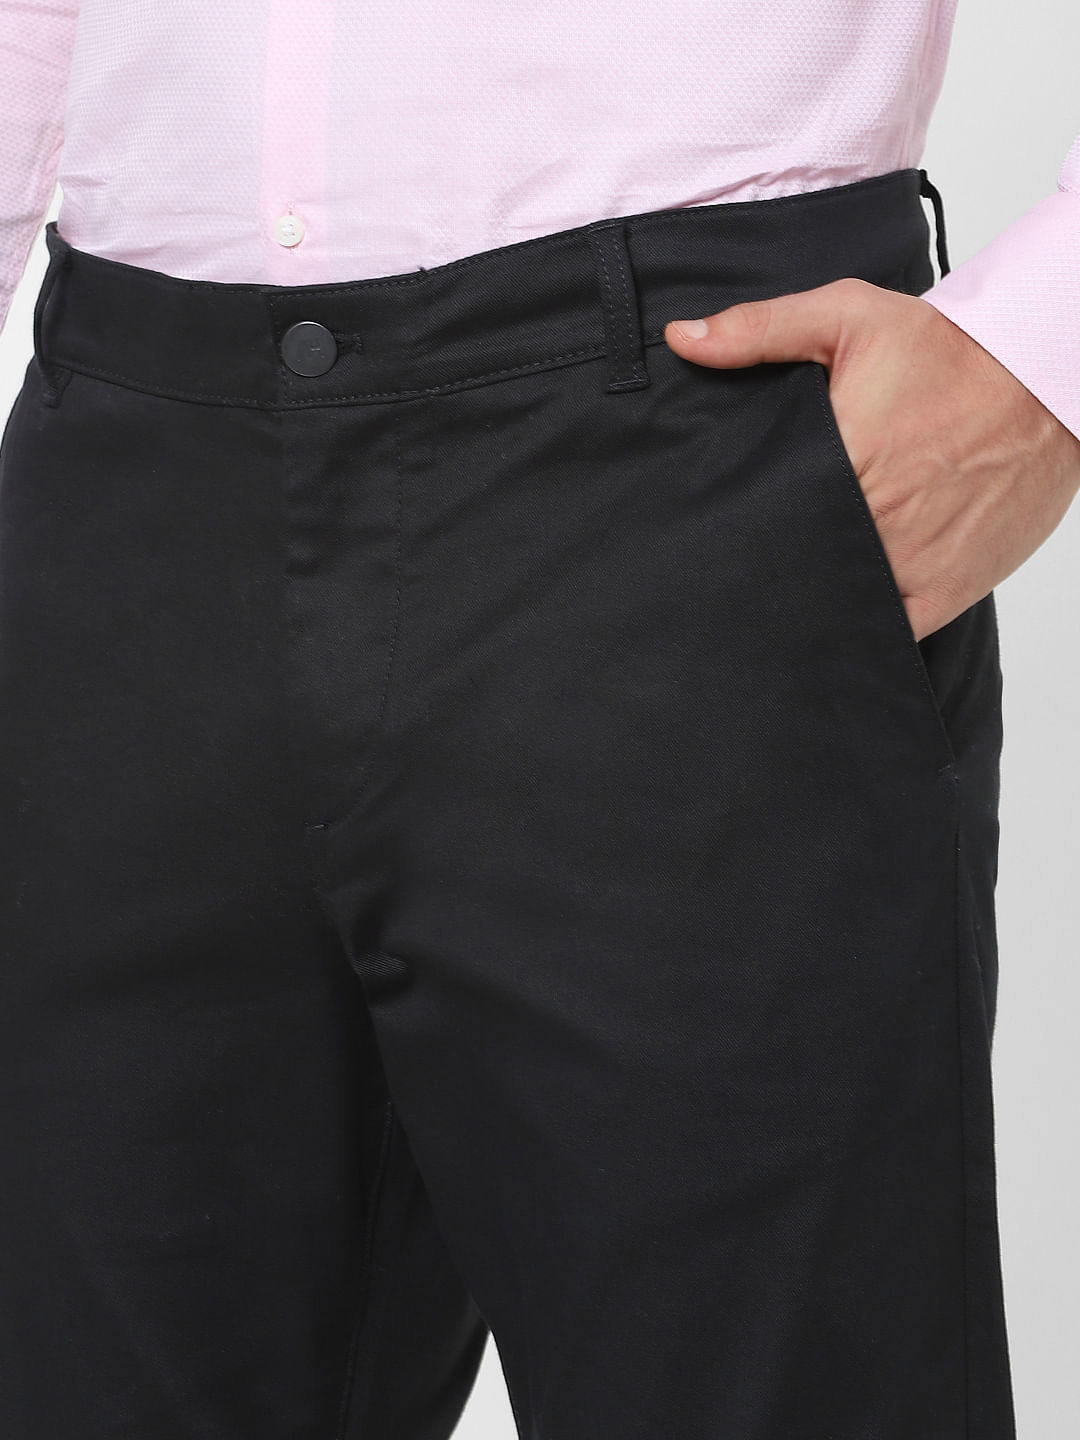 Buy the Garmspot Straight Chino Trousers in Black on Garmspot.com